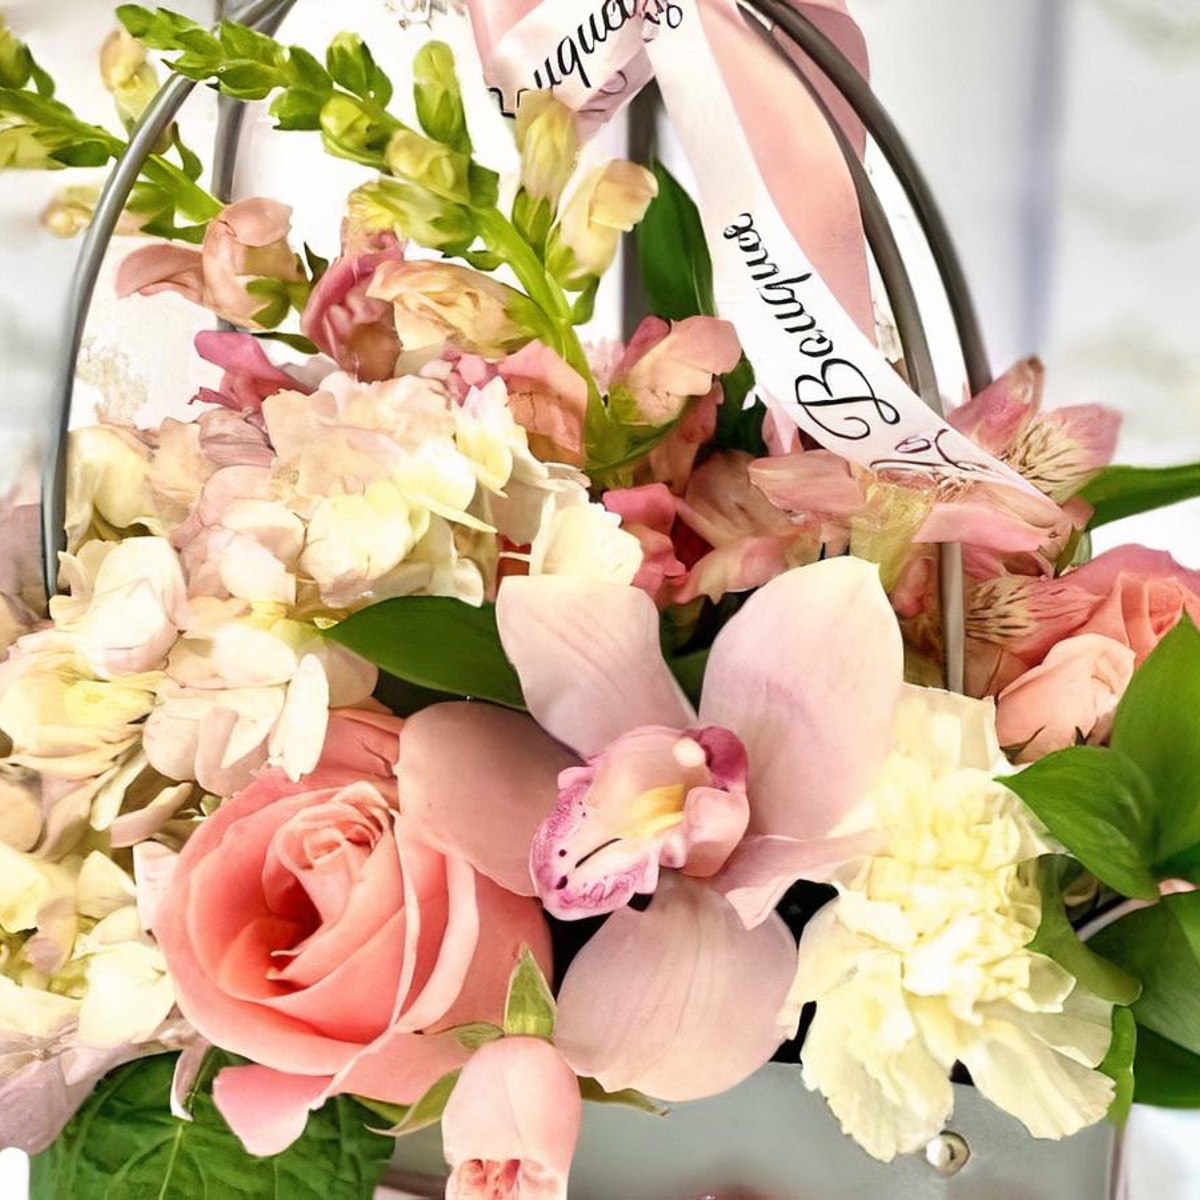 Paper Wrapped Bouquets - Desiner's Choice Orlando Florist